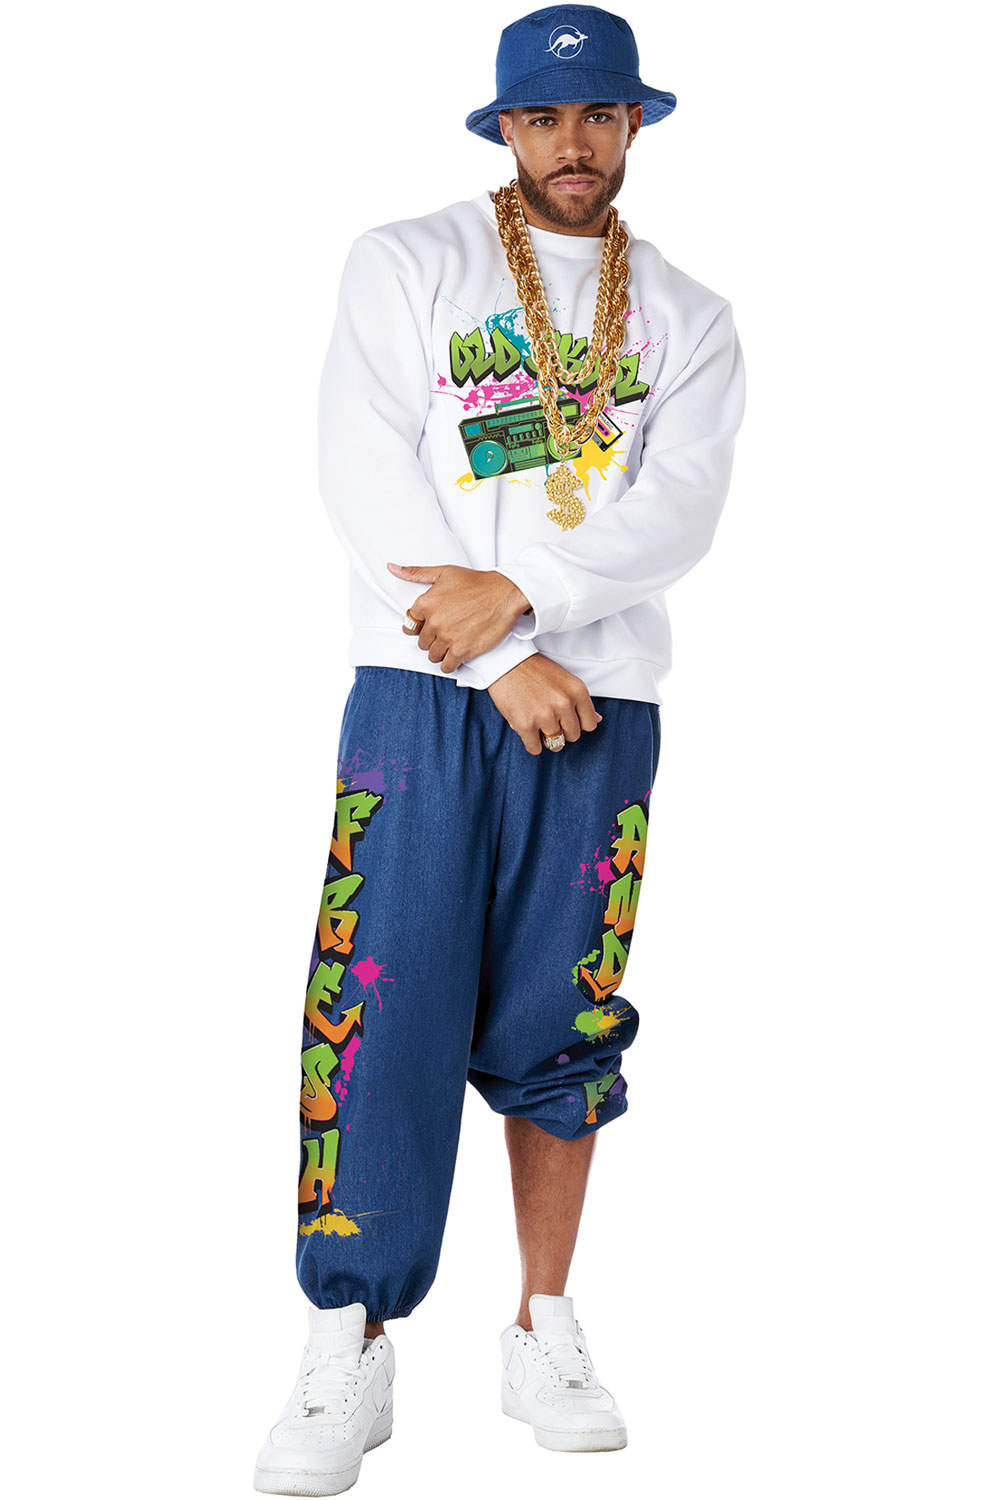  Aolapo 90s Outfit for Men, Unisex Badboy #10 Hip Hop